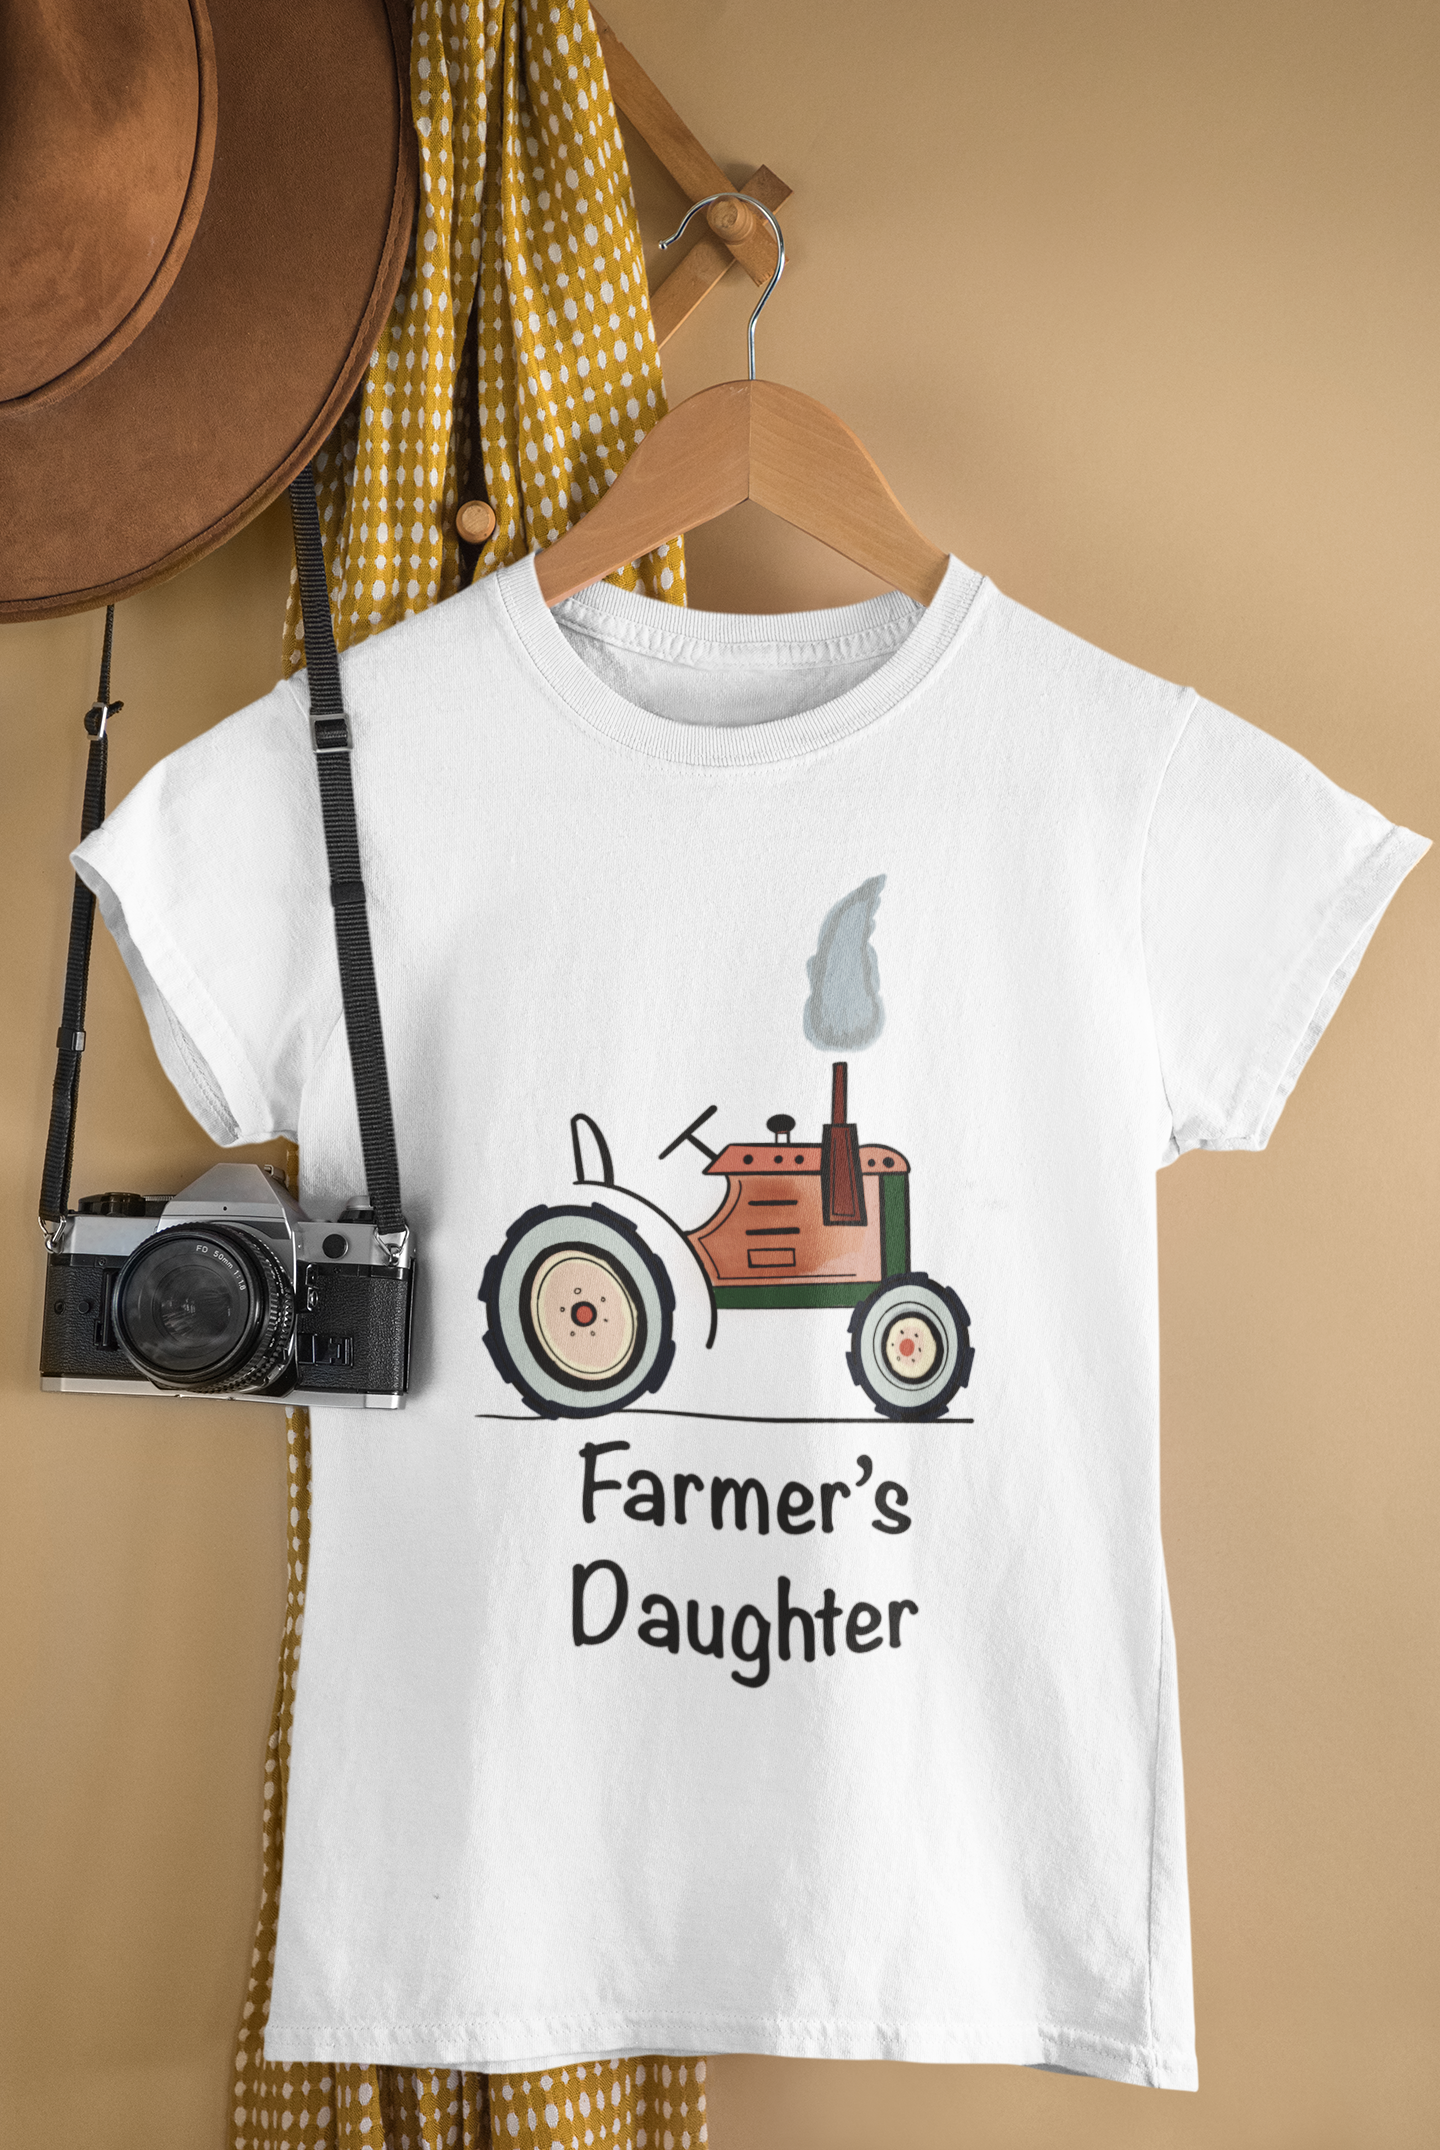 Farmer’s daughter t-shirt